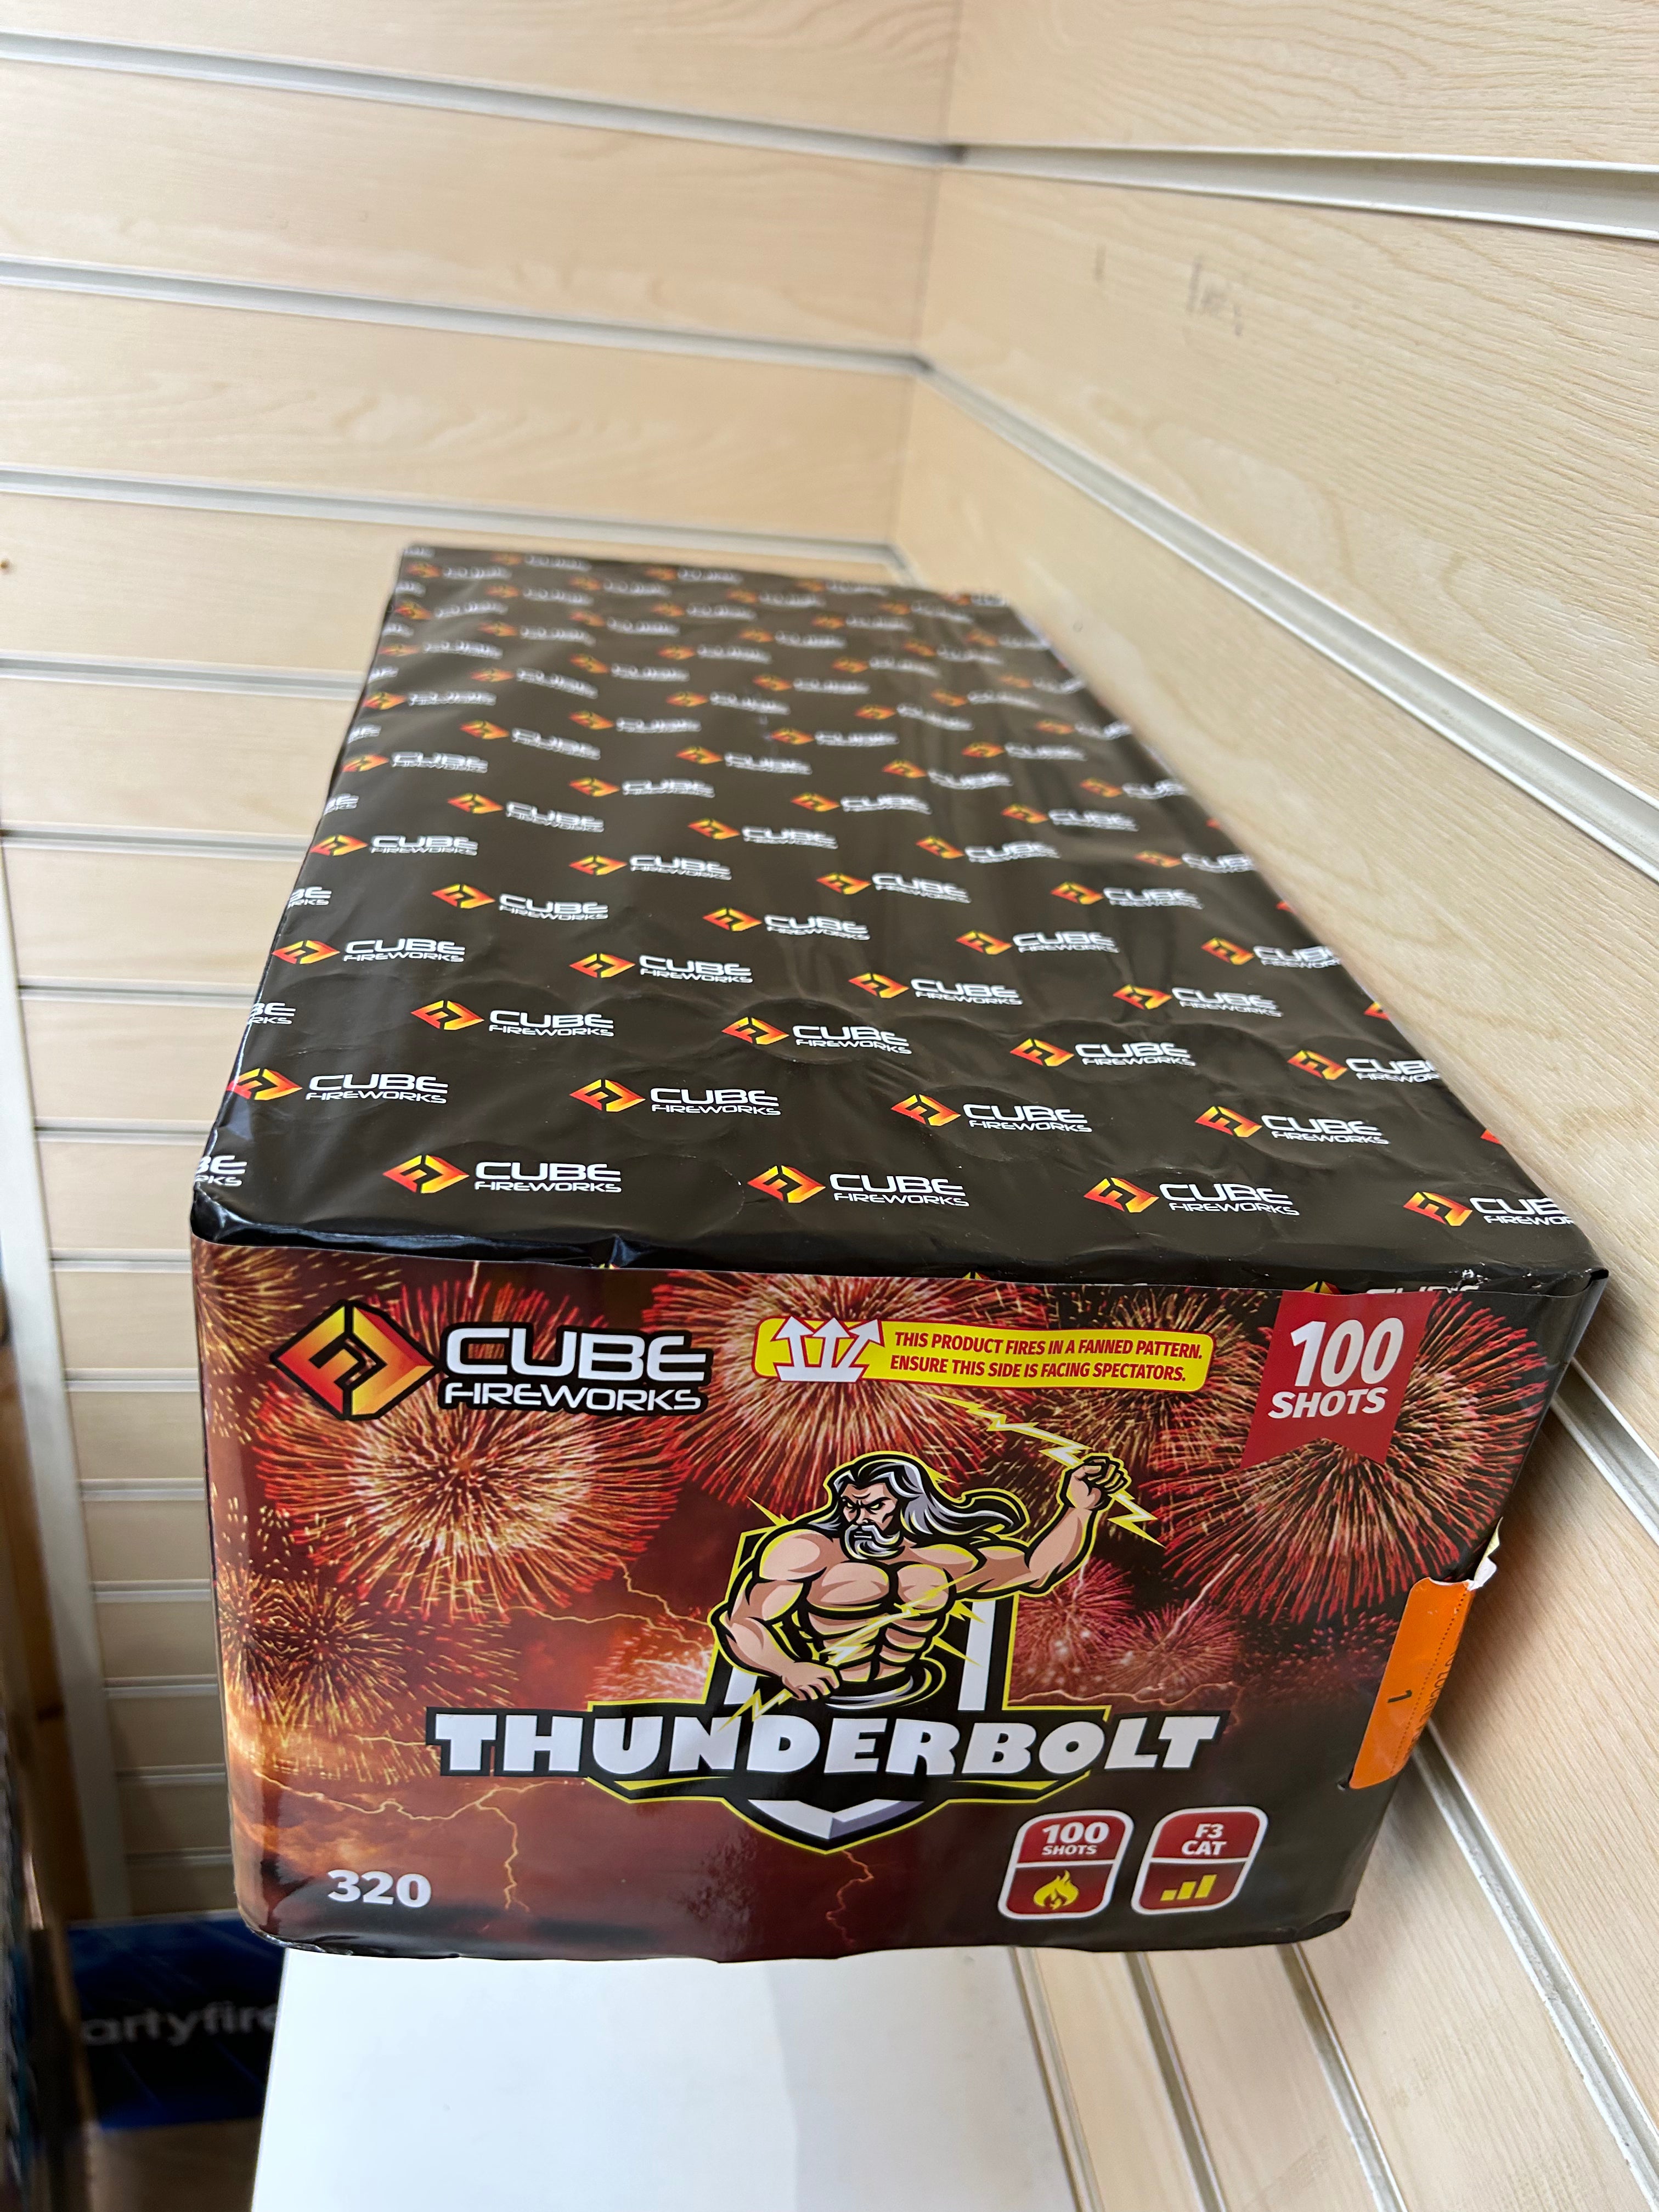 Thunderbolt , wow a fantastic big firework!!